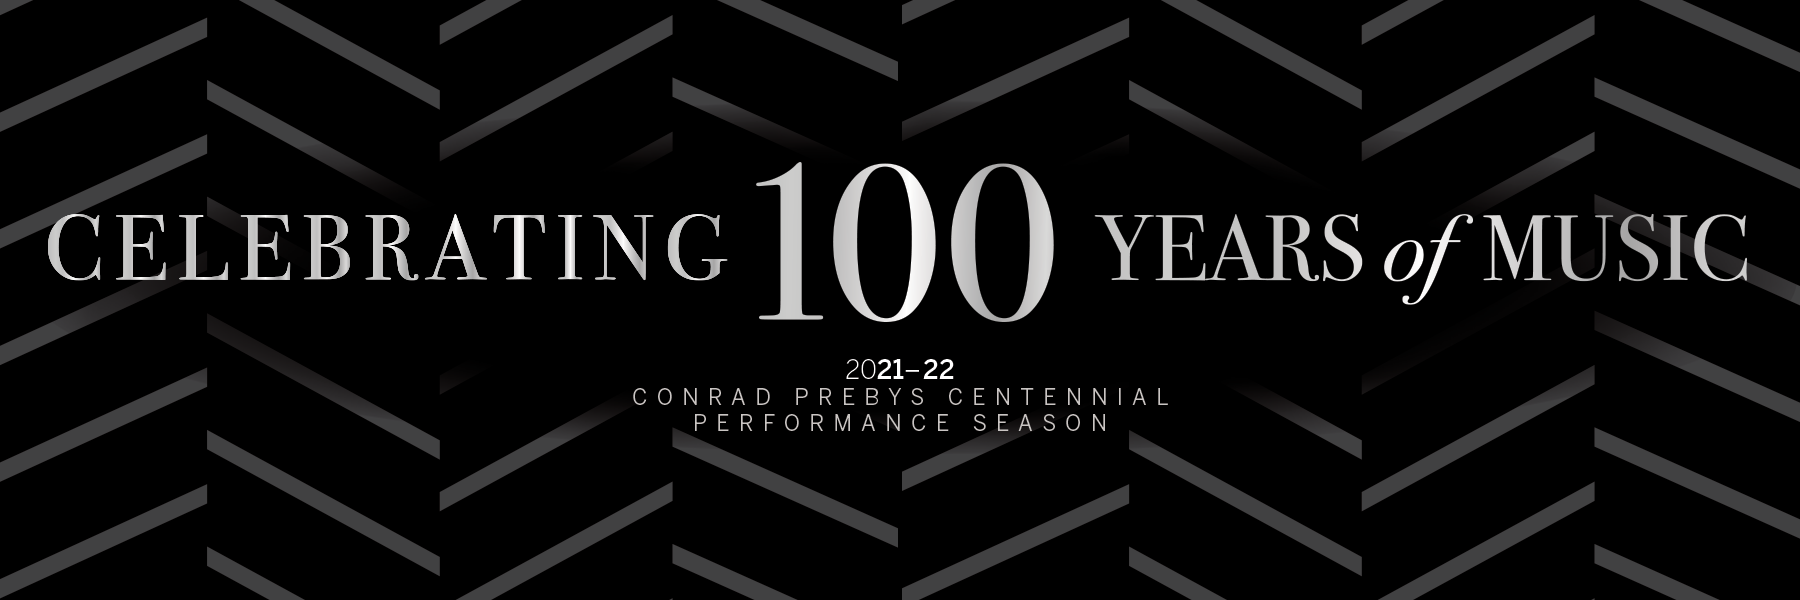 Celebrating 100 Years of Music. 2021-22 Conrad Prebys Centennial Performance Season.